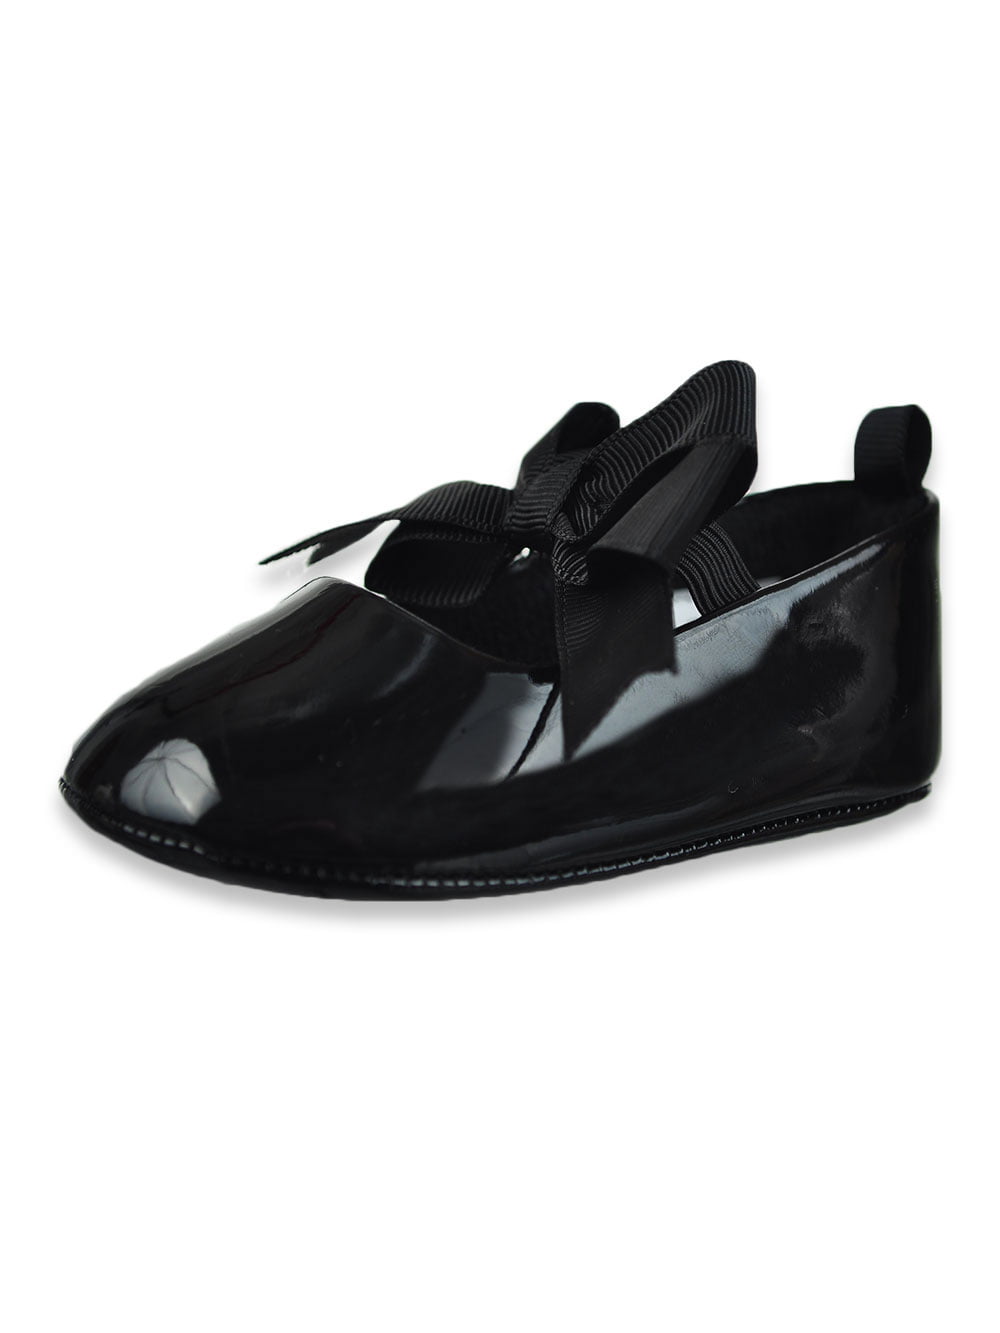 New girl kids back zipper buckle black synthetic patent flower girl dress shoes 